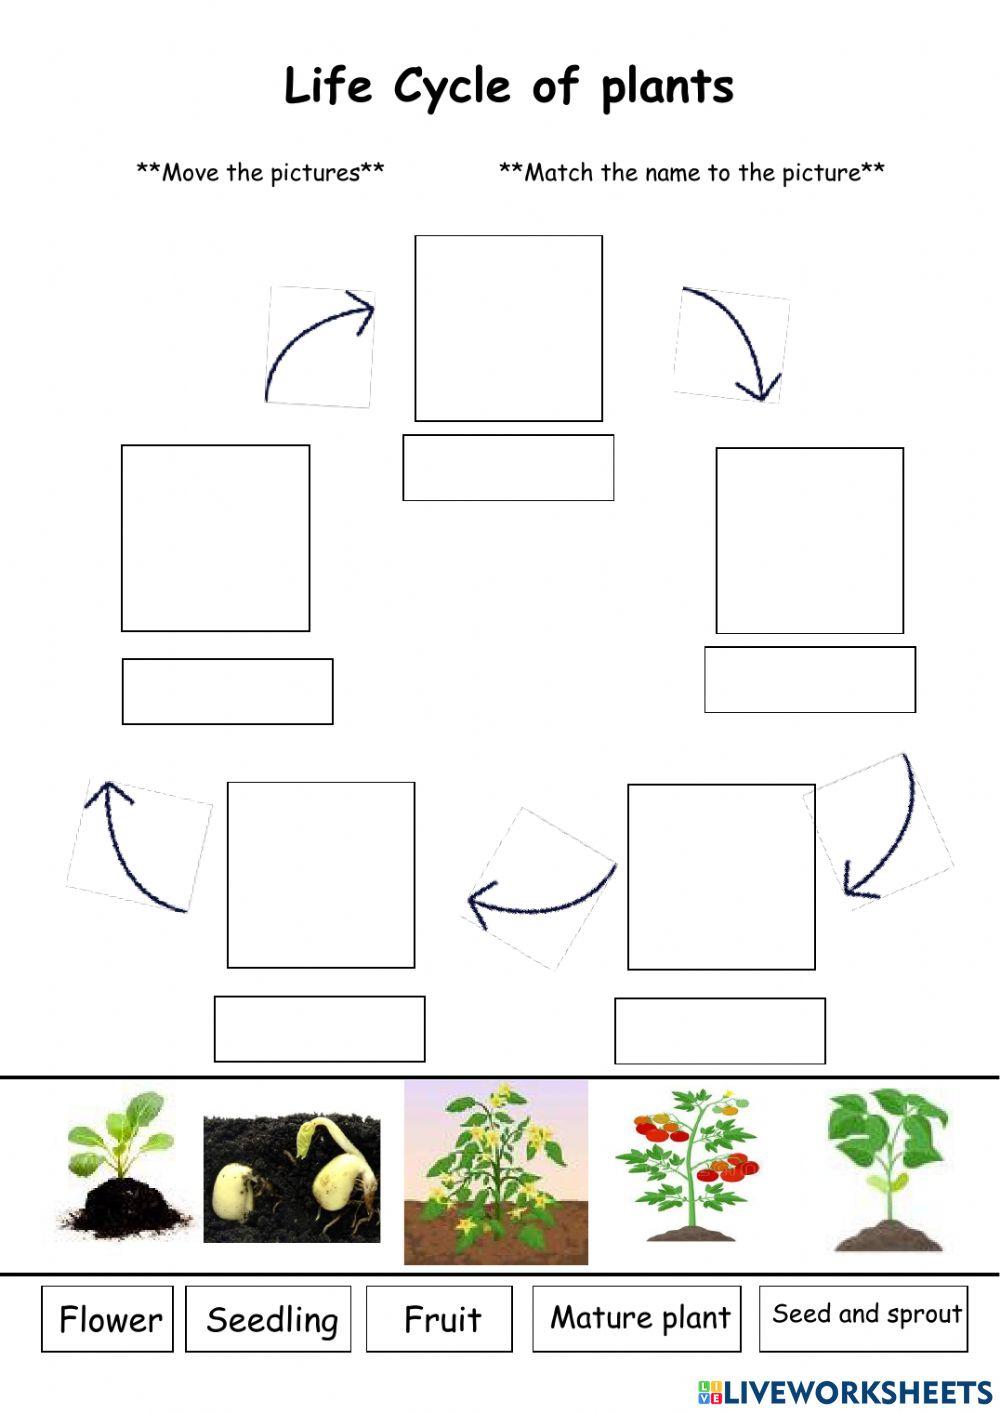 Life Cycle of plants